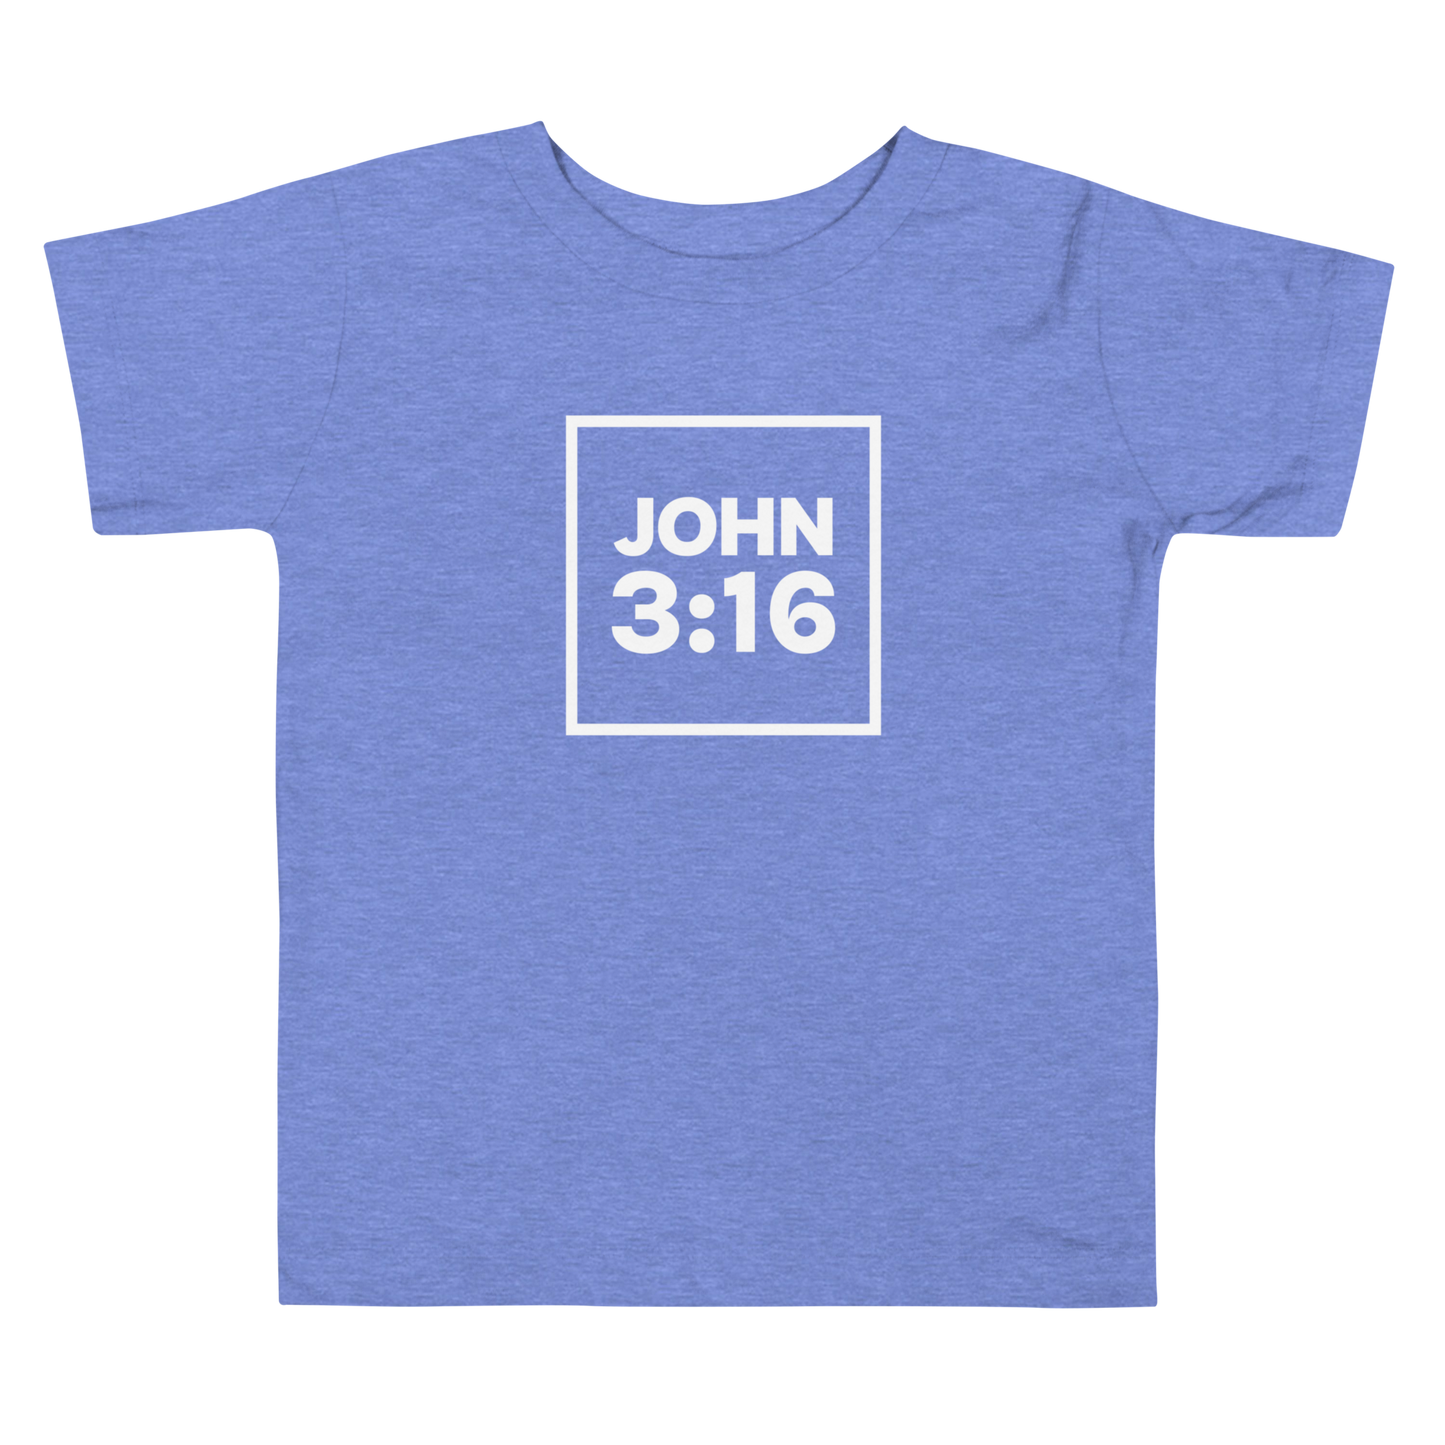 John 3:16 - Toddler Short Sleeve Tee